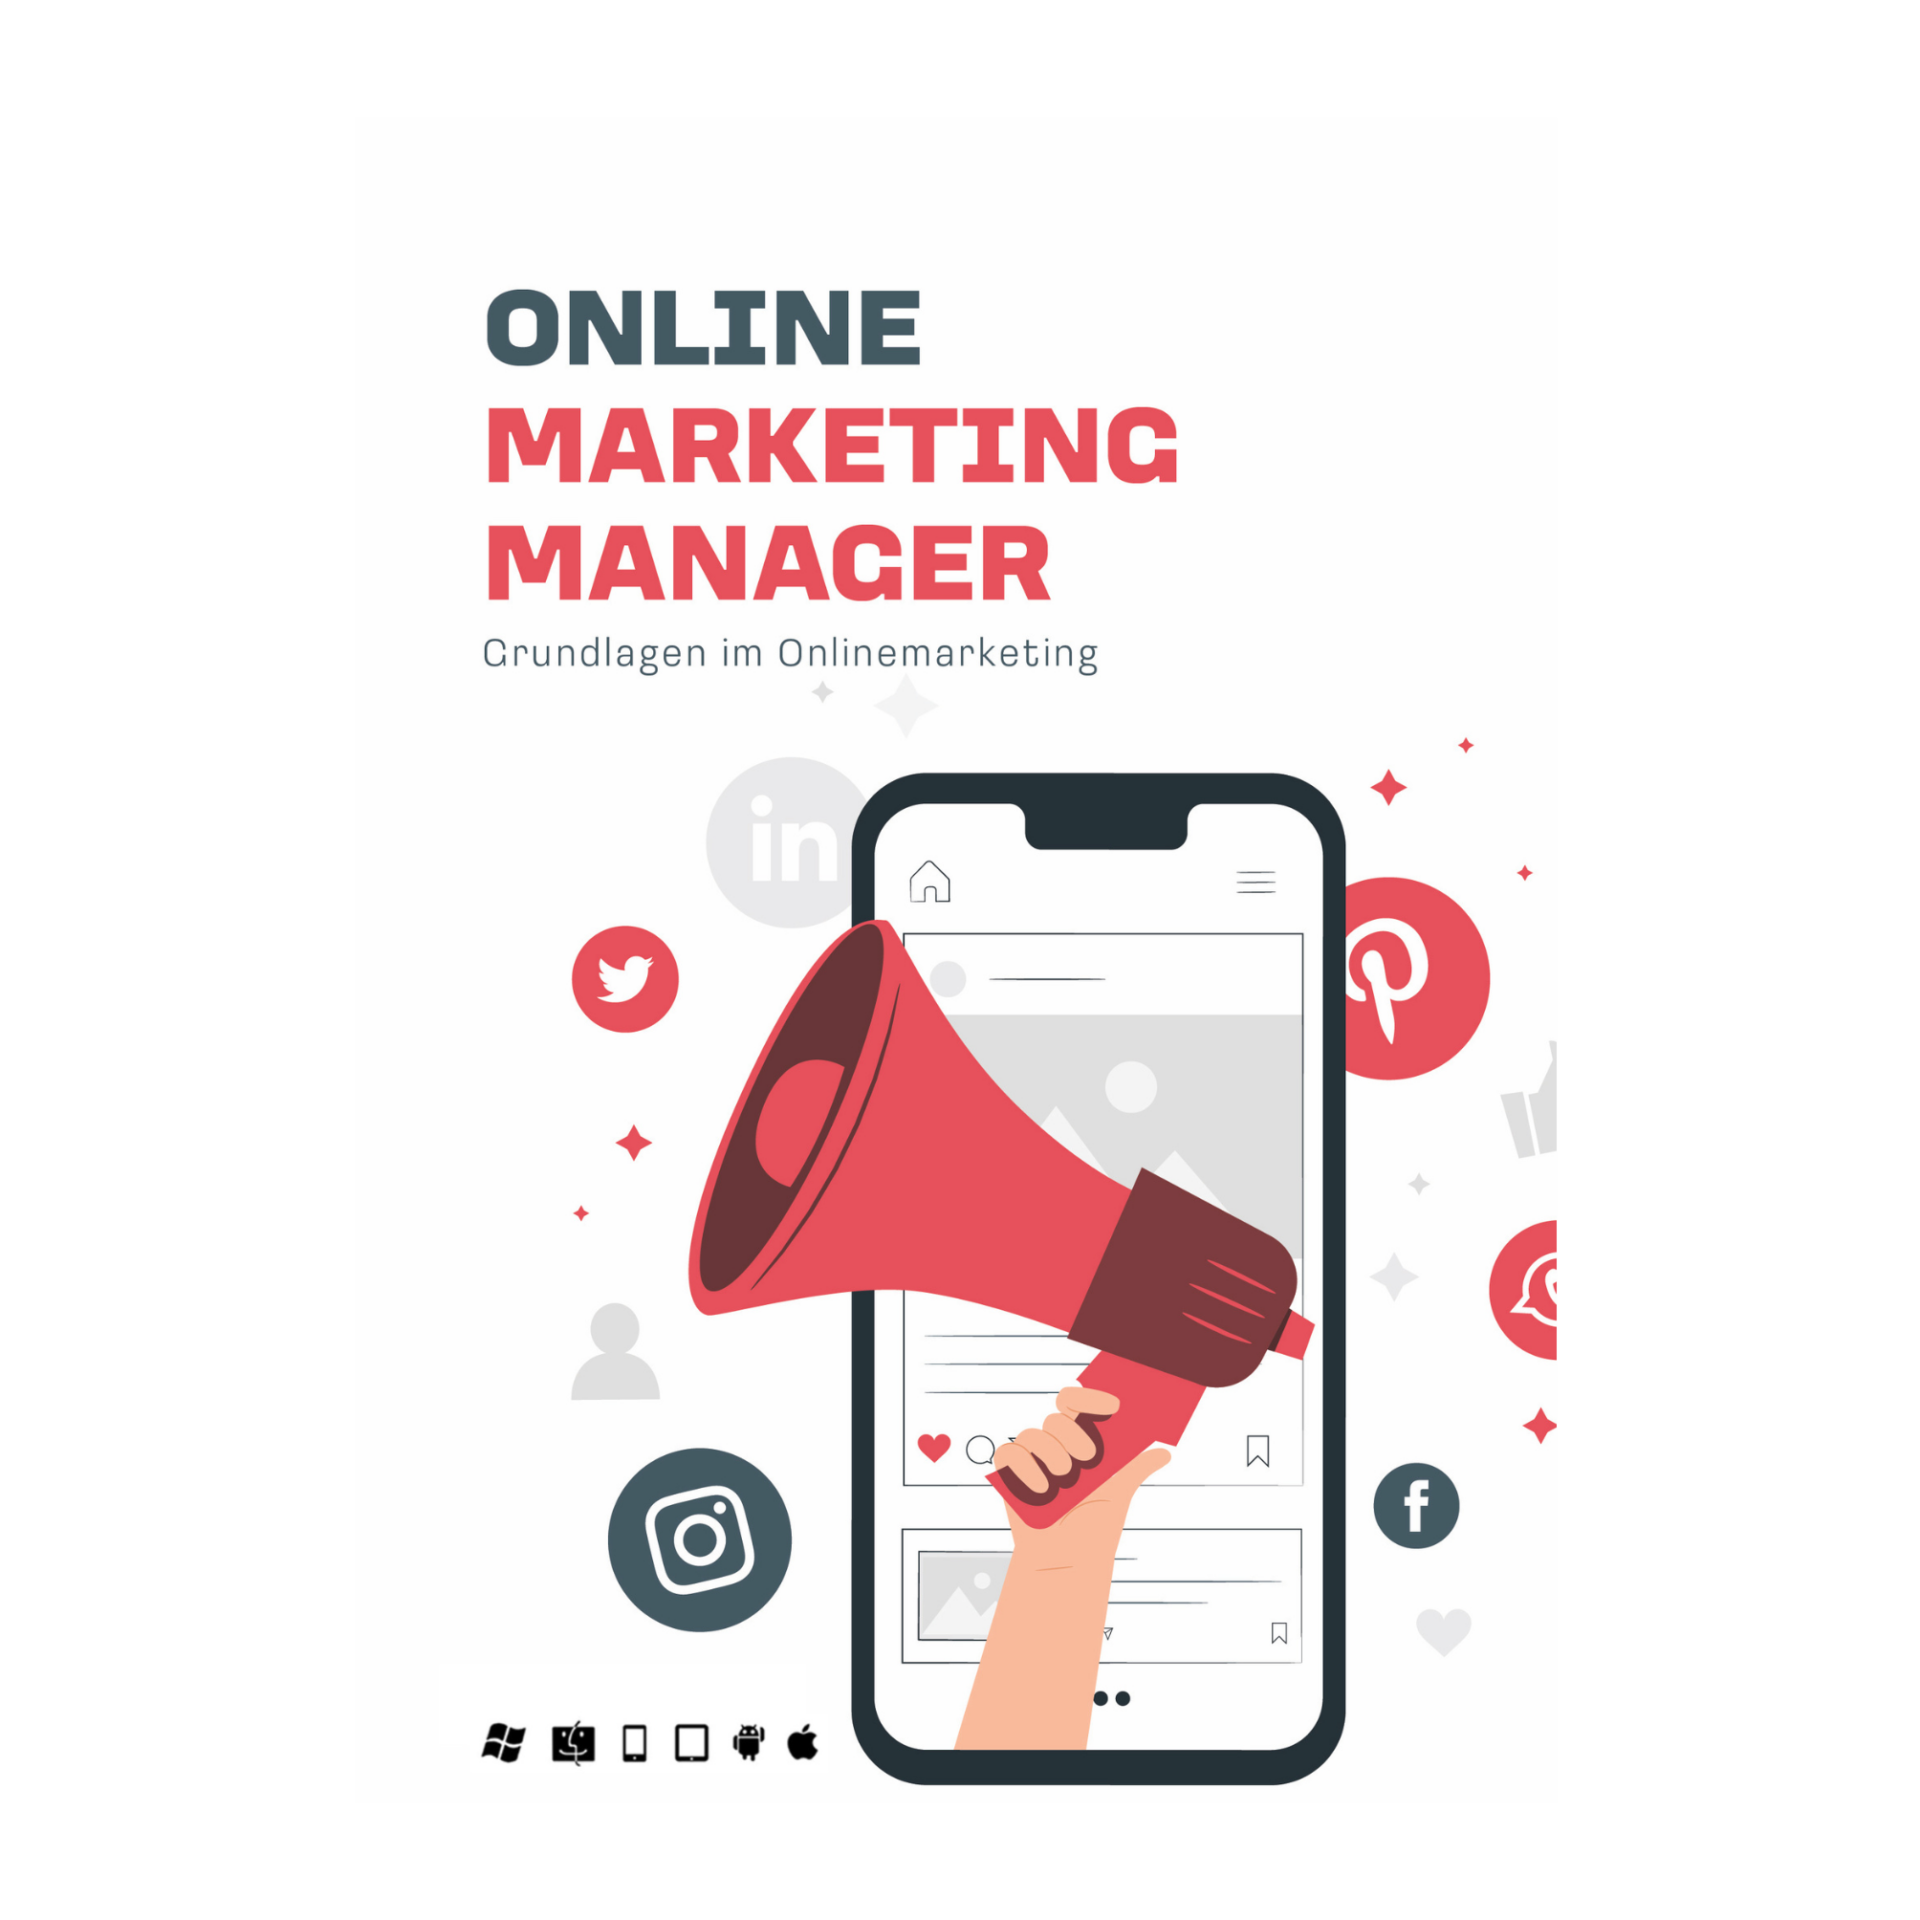 Online Marketing Manager Produktbild_final